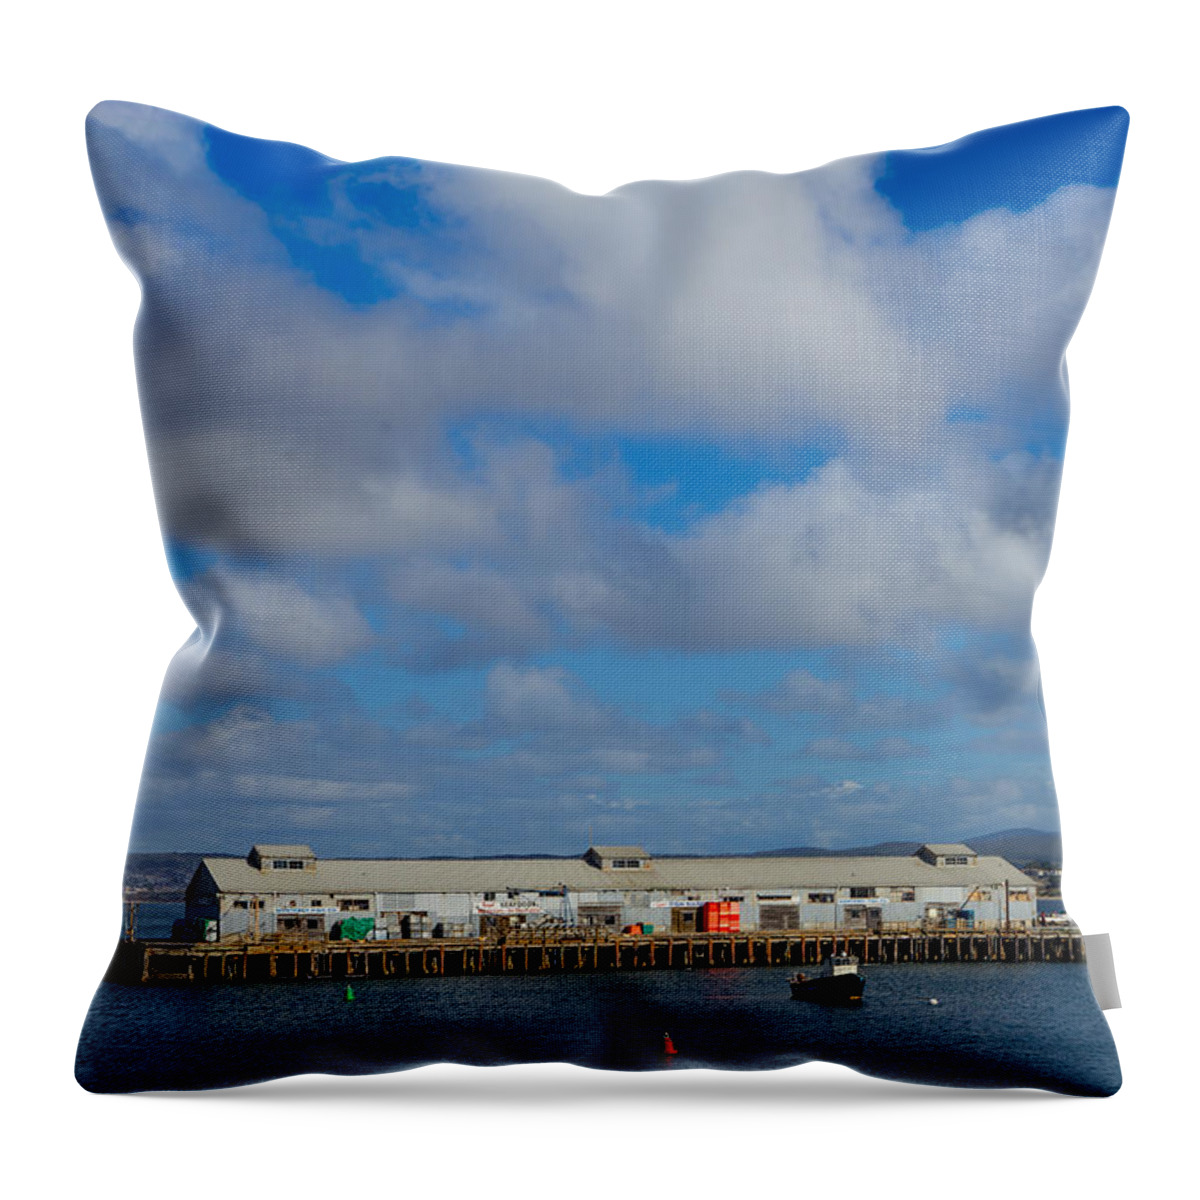 Monterey Commercial Wharf Throw Pillow featuring the photograph Monterey Commercial Wharf by Derek Dean